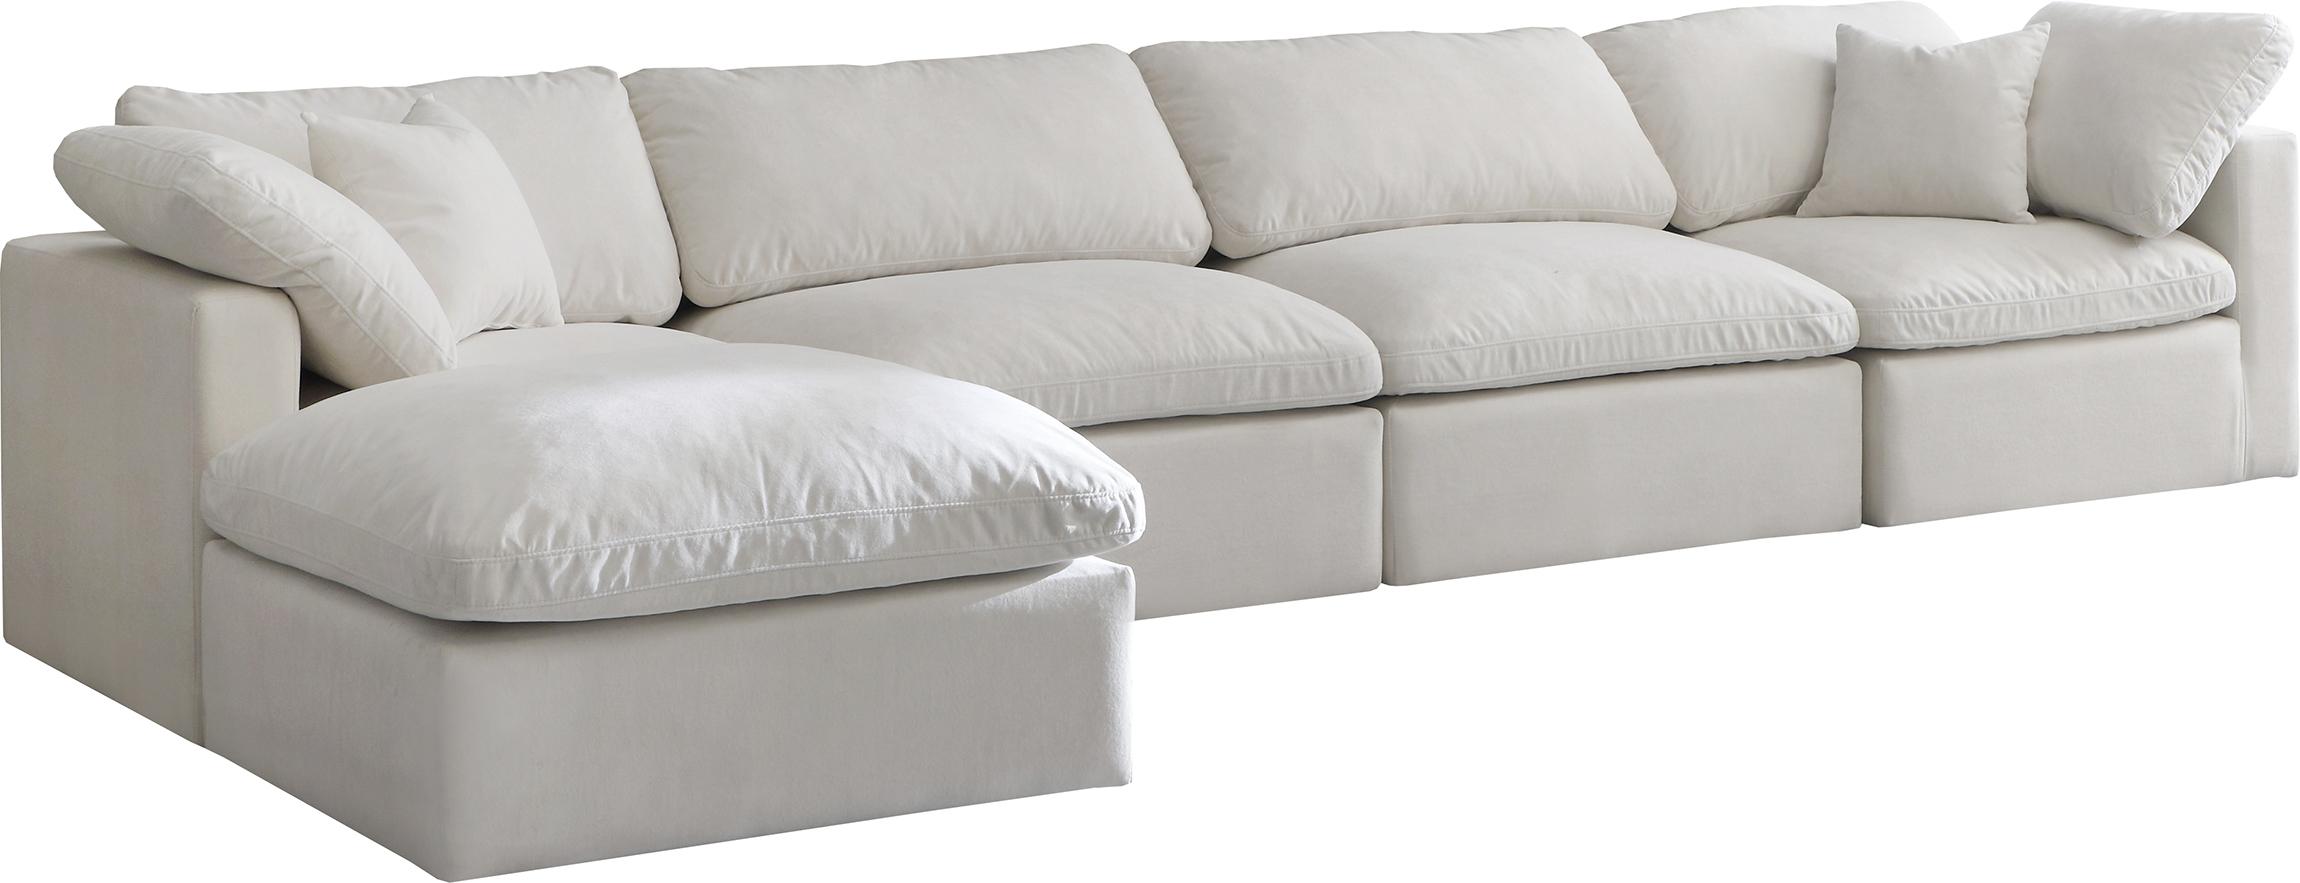 Contemporary, Modern Modular Sectional Sofa Cloud CREAM CREAM-Sec-Cloud in Cream Fabric